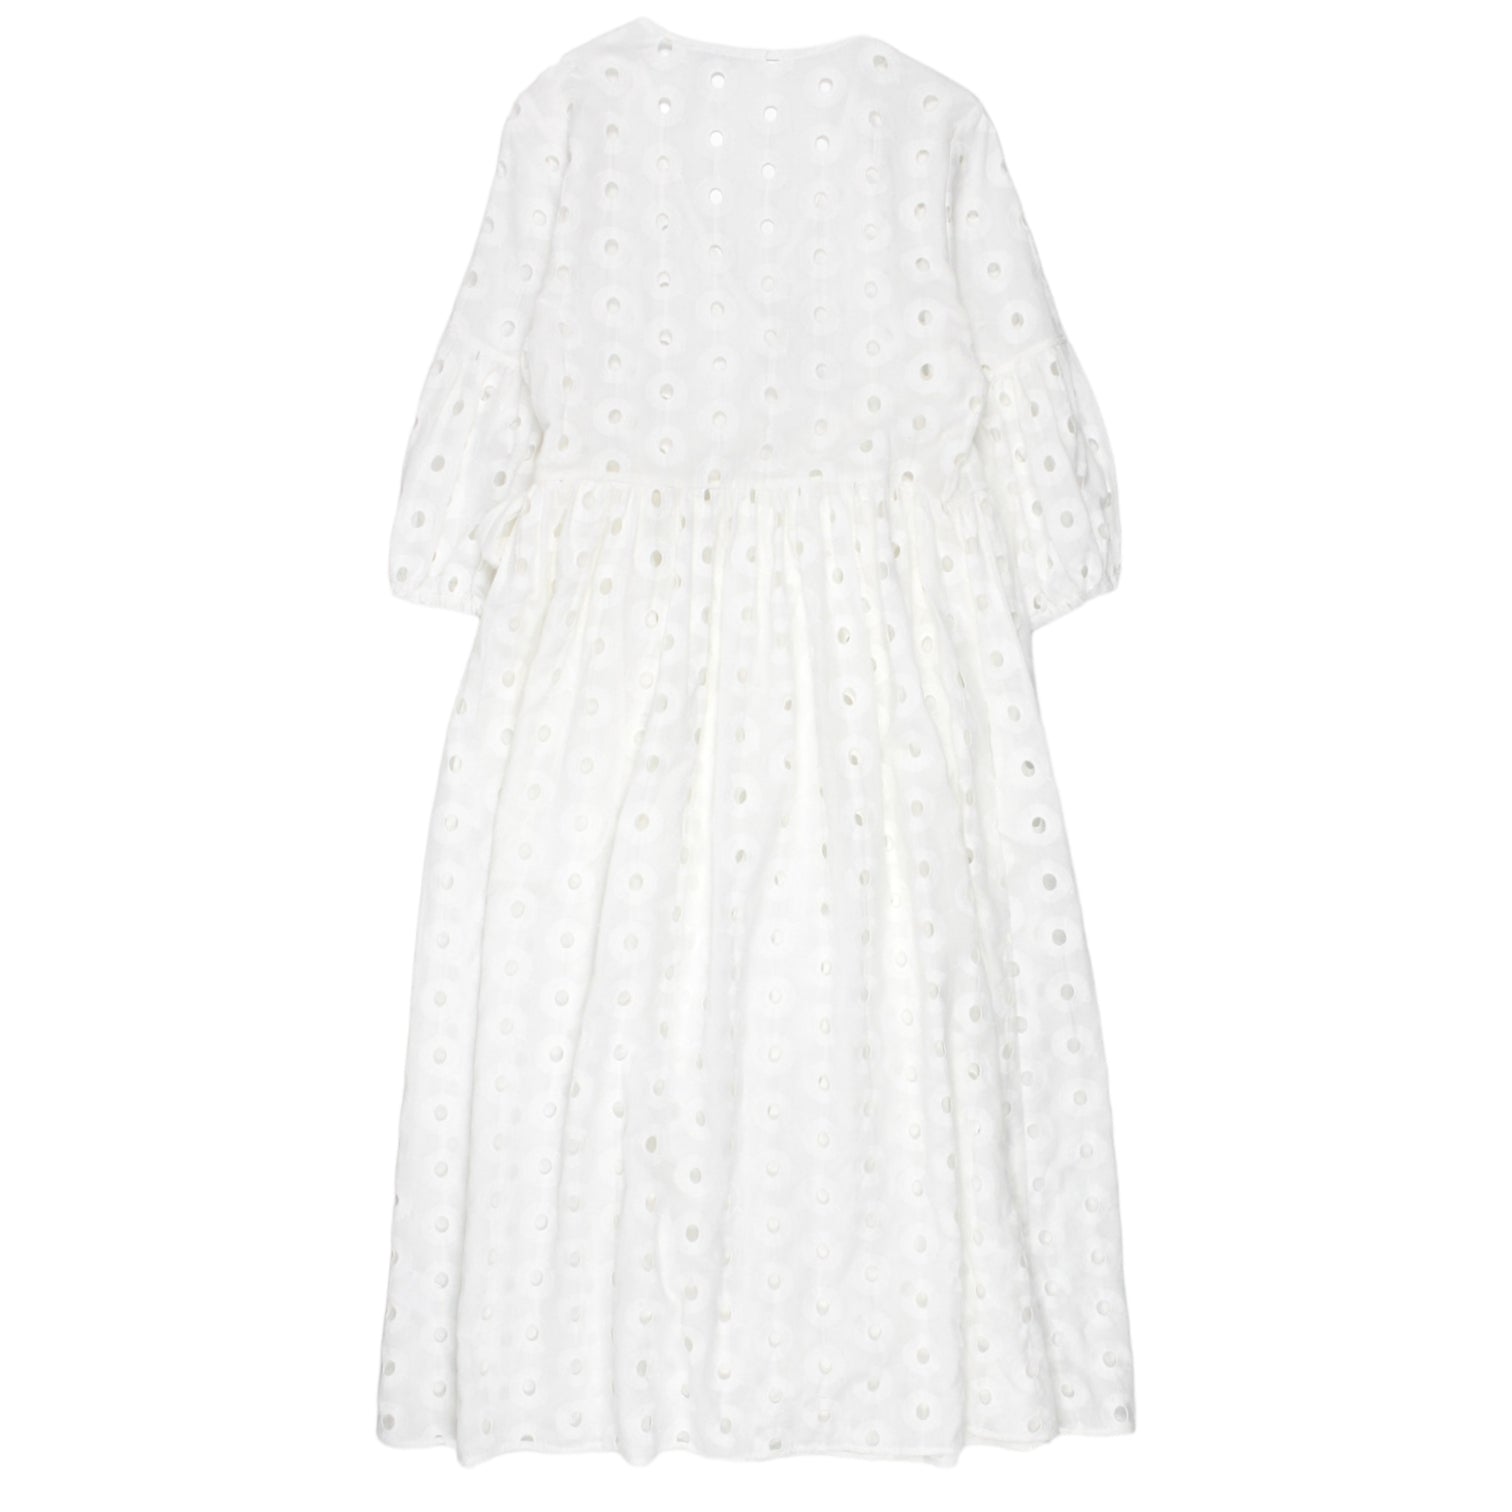 NRBY White Circle Broderie Anglais Dress - Sample